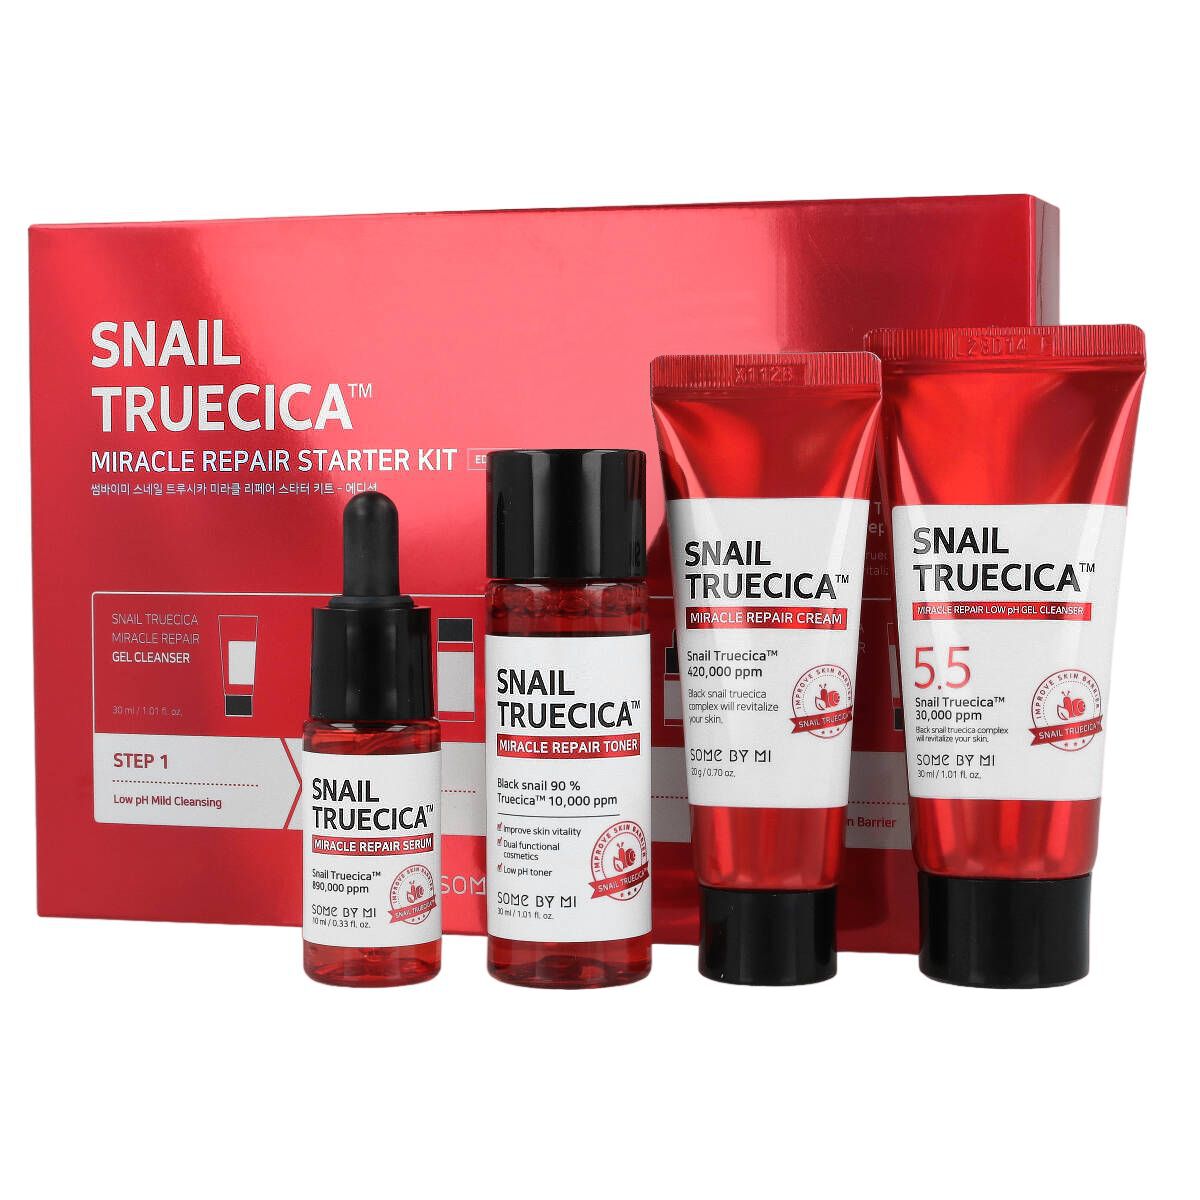 Набор миниатюр для проблемной кожи: сыворотка Some By Mi Snail Truecica, 30 мл somebymi snail truecica miracle repair starter kit